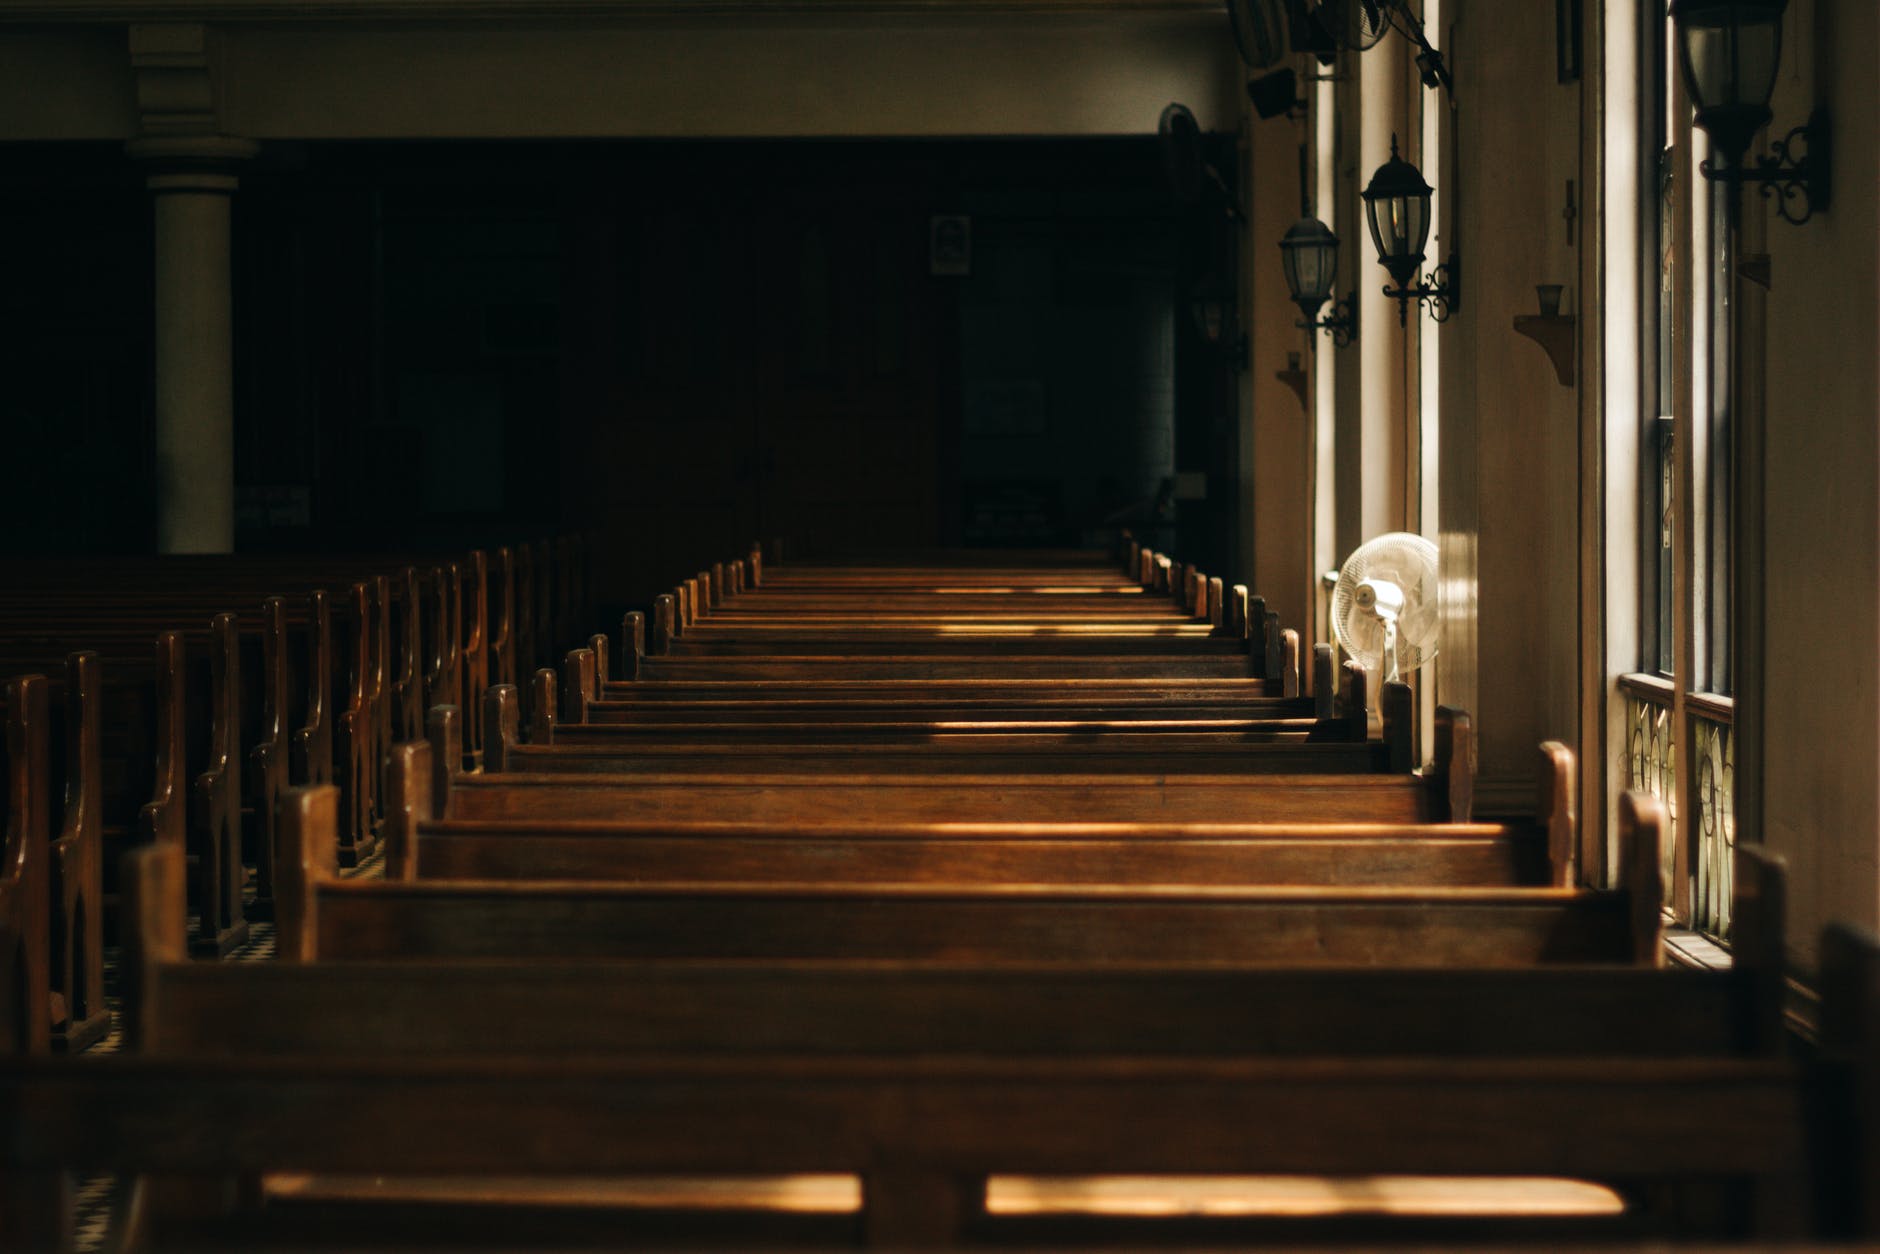 A row of pews inside a dark church | Source: Pexels